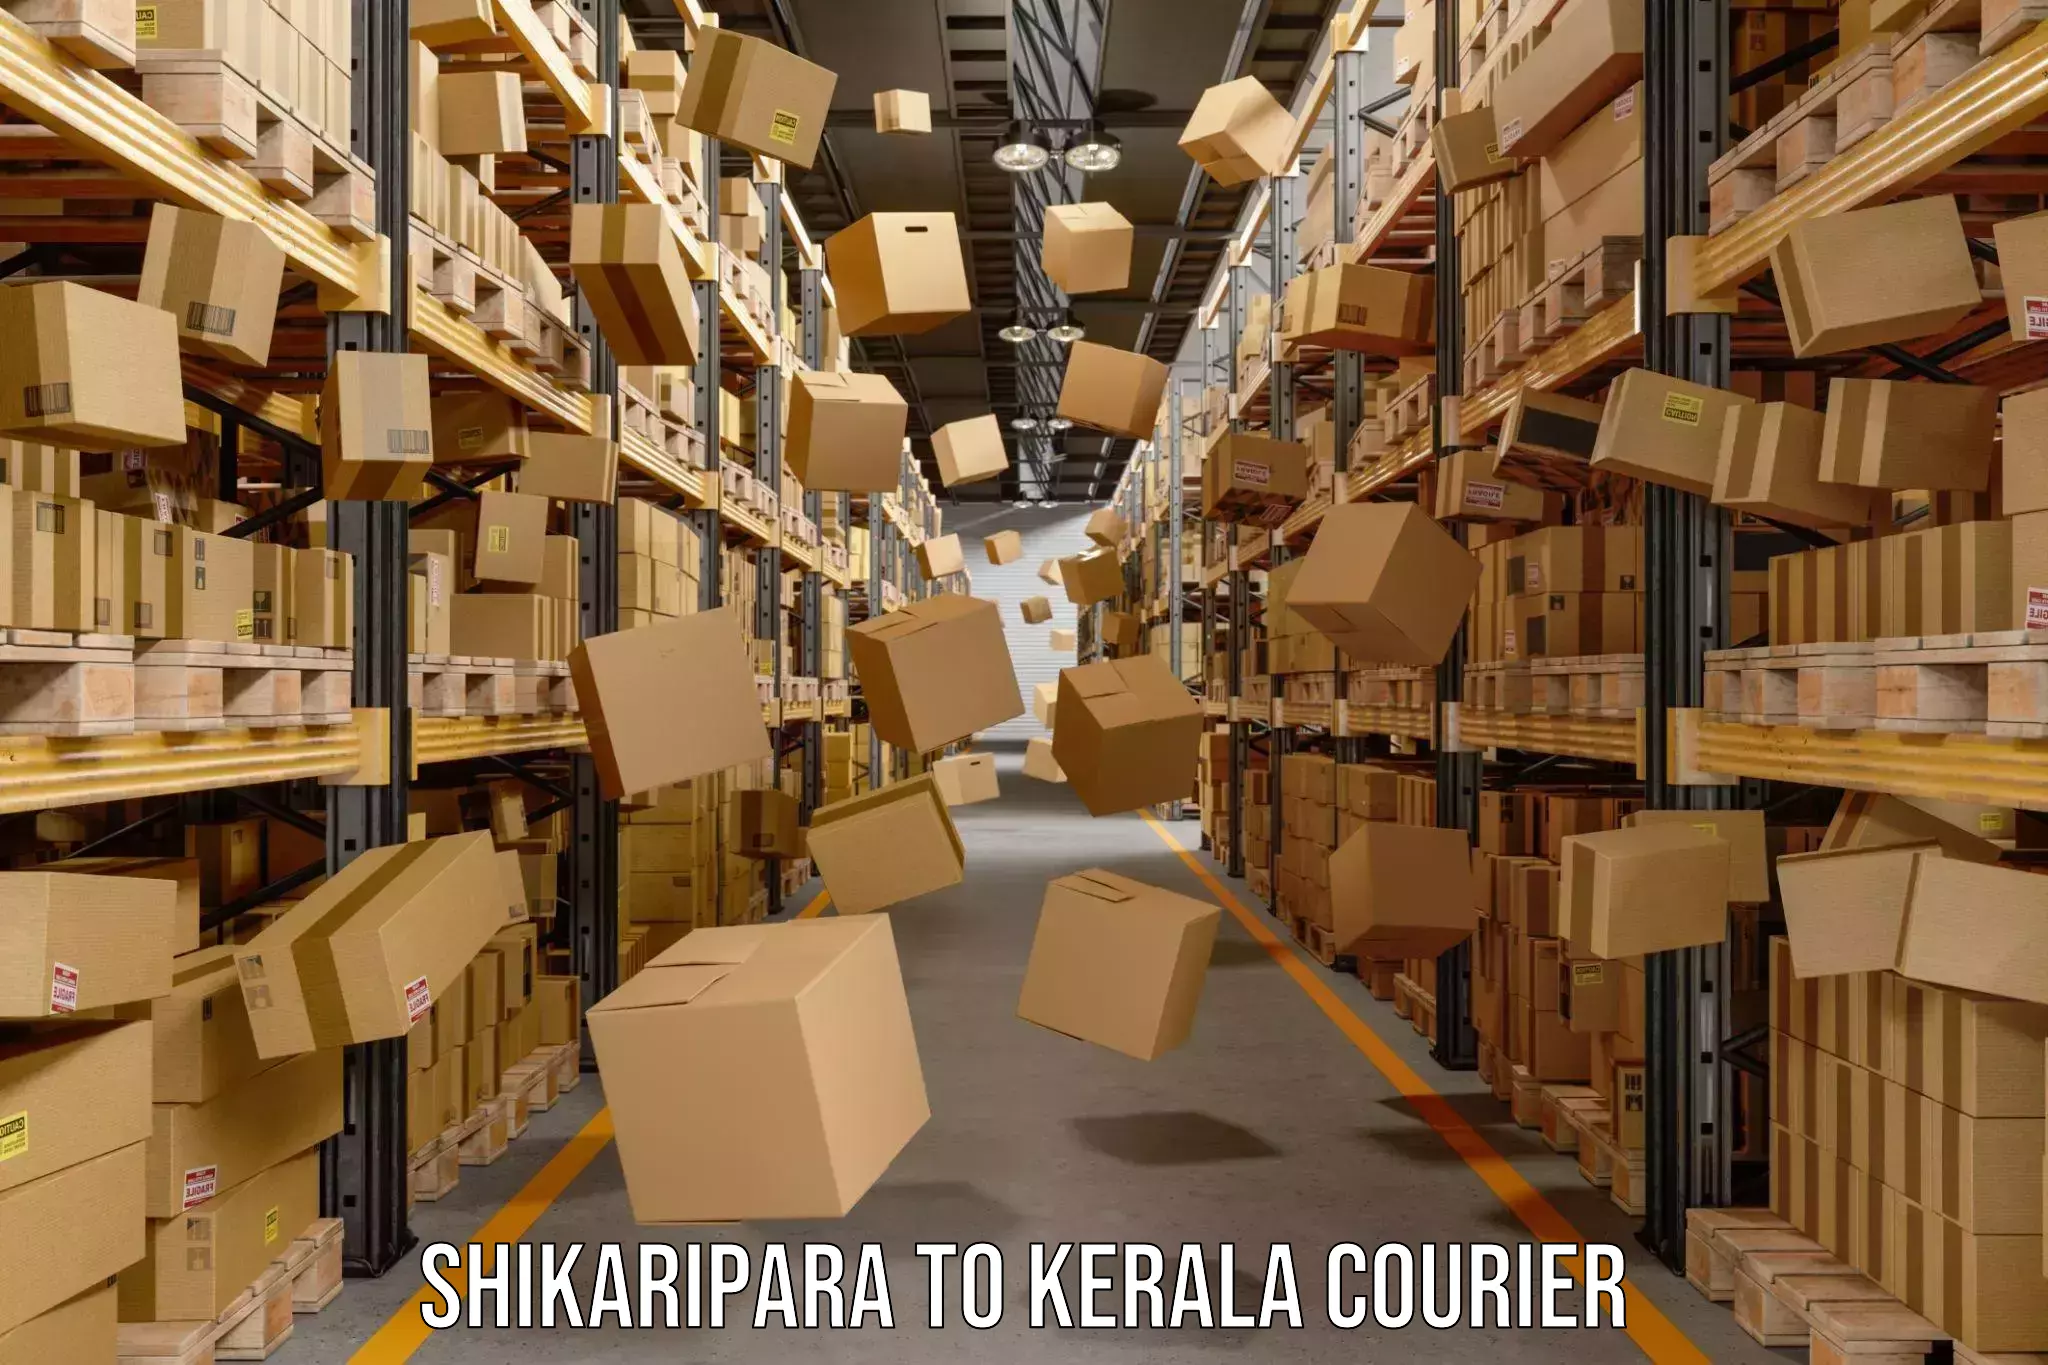 Courier service comparison Shikaripara to Ponekkara